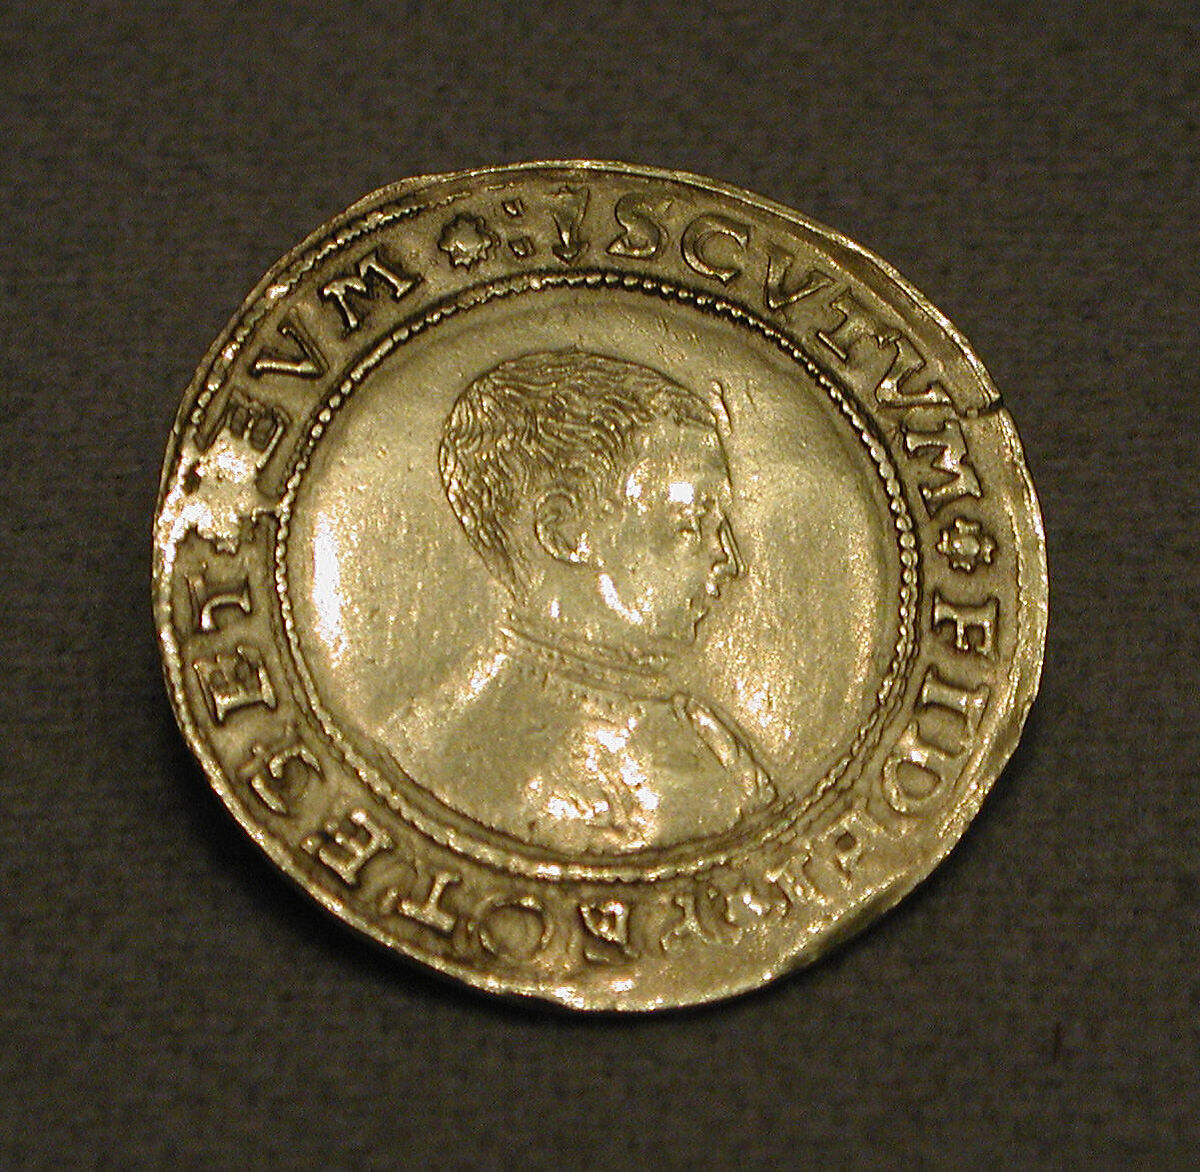 Half sovereign of Edward VI, Gold, British 